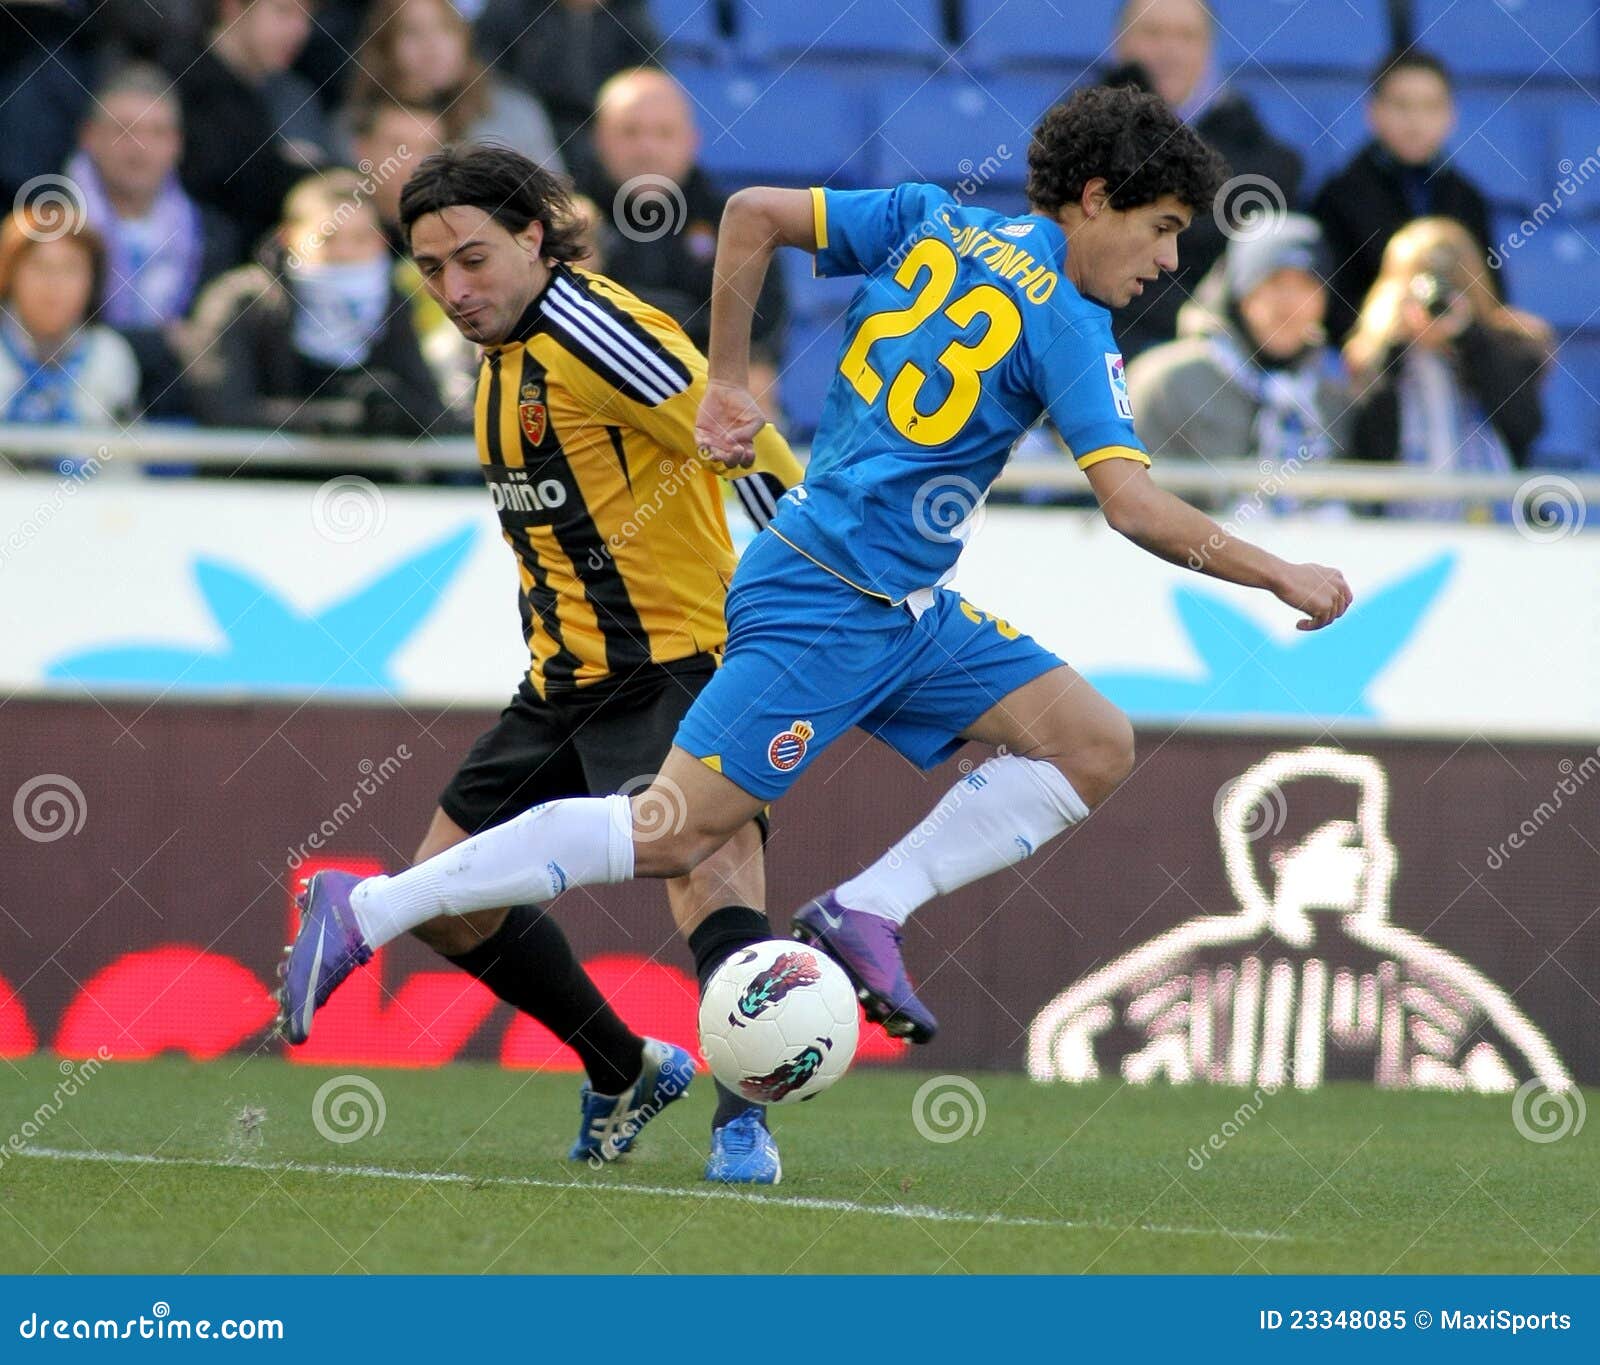 Coutinho of Espanyol Vies with Alvarez of Zaragoza Editorial - Image of brazil, defender: